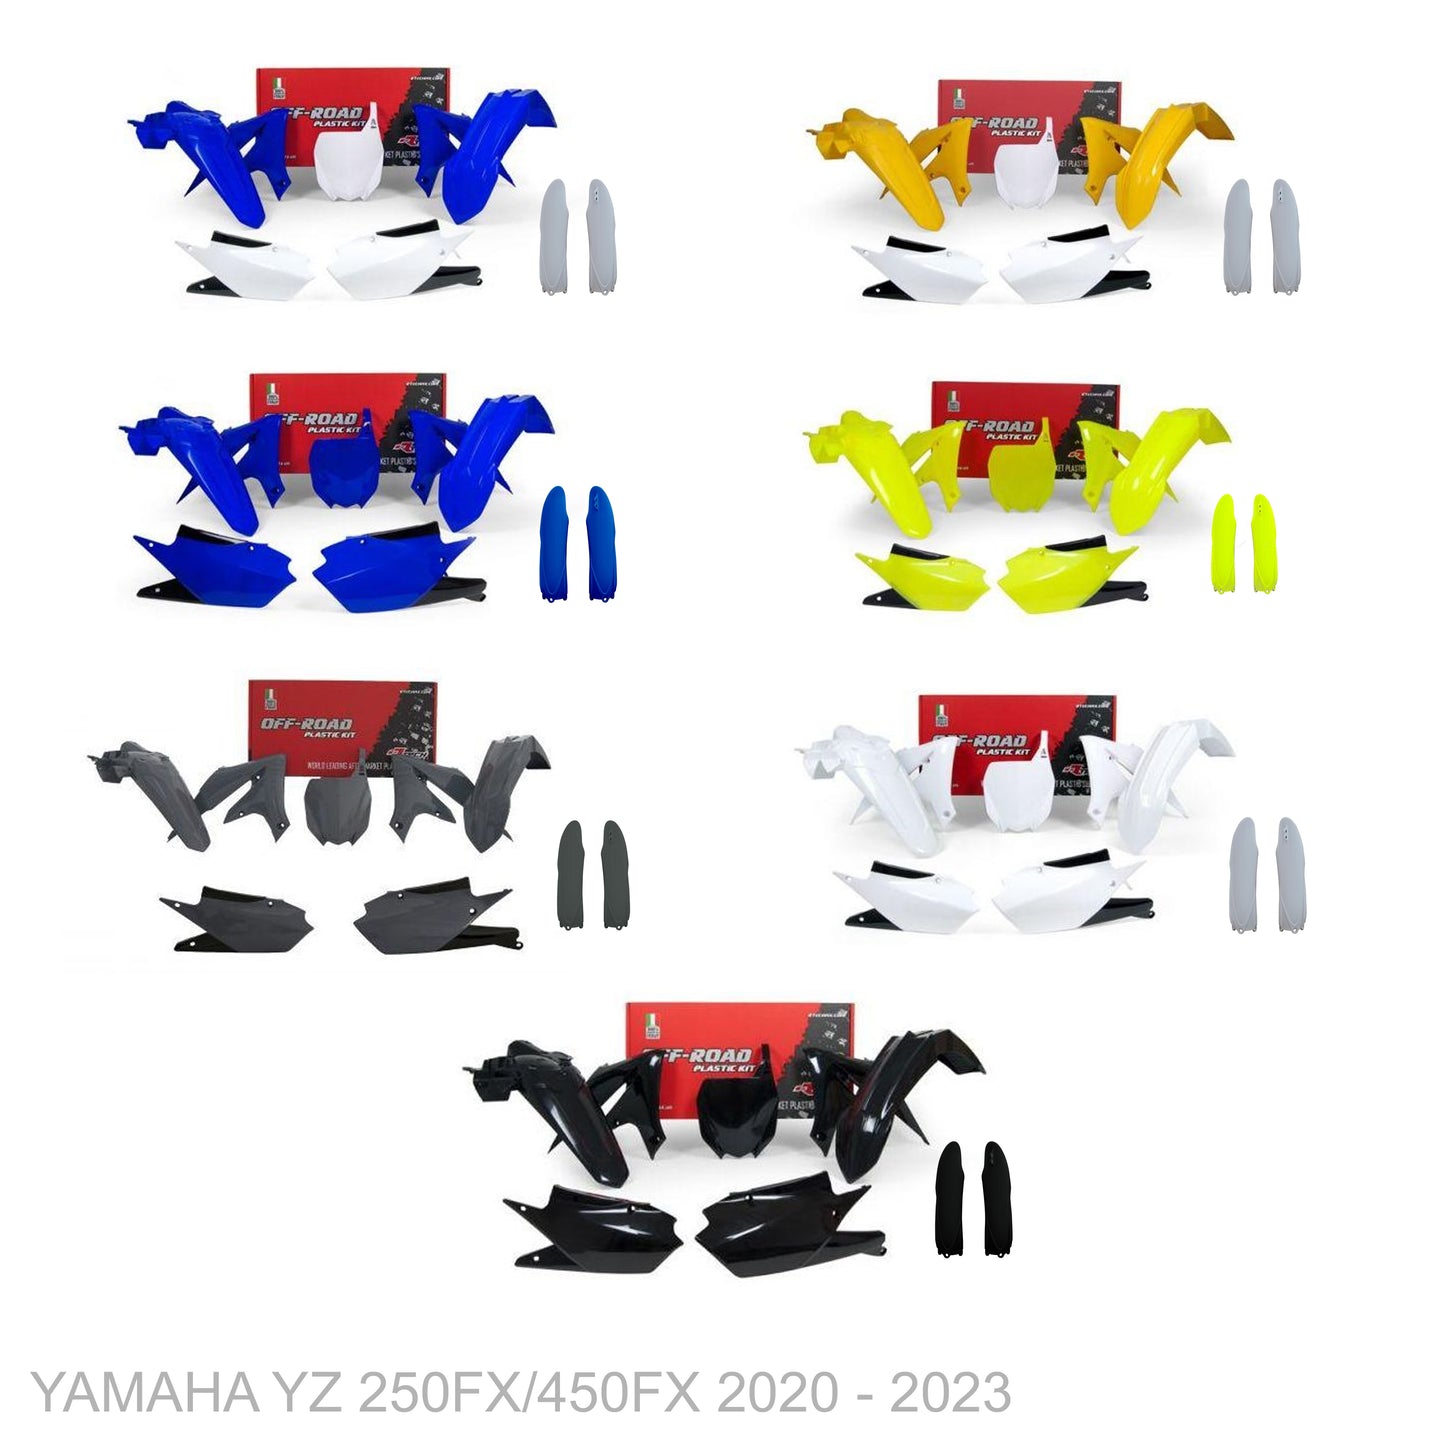 YAMAHA YZ 250F/FX 2020 - 2023 Start From Scratch Graphics Kits